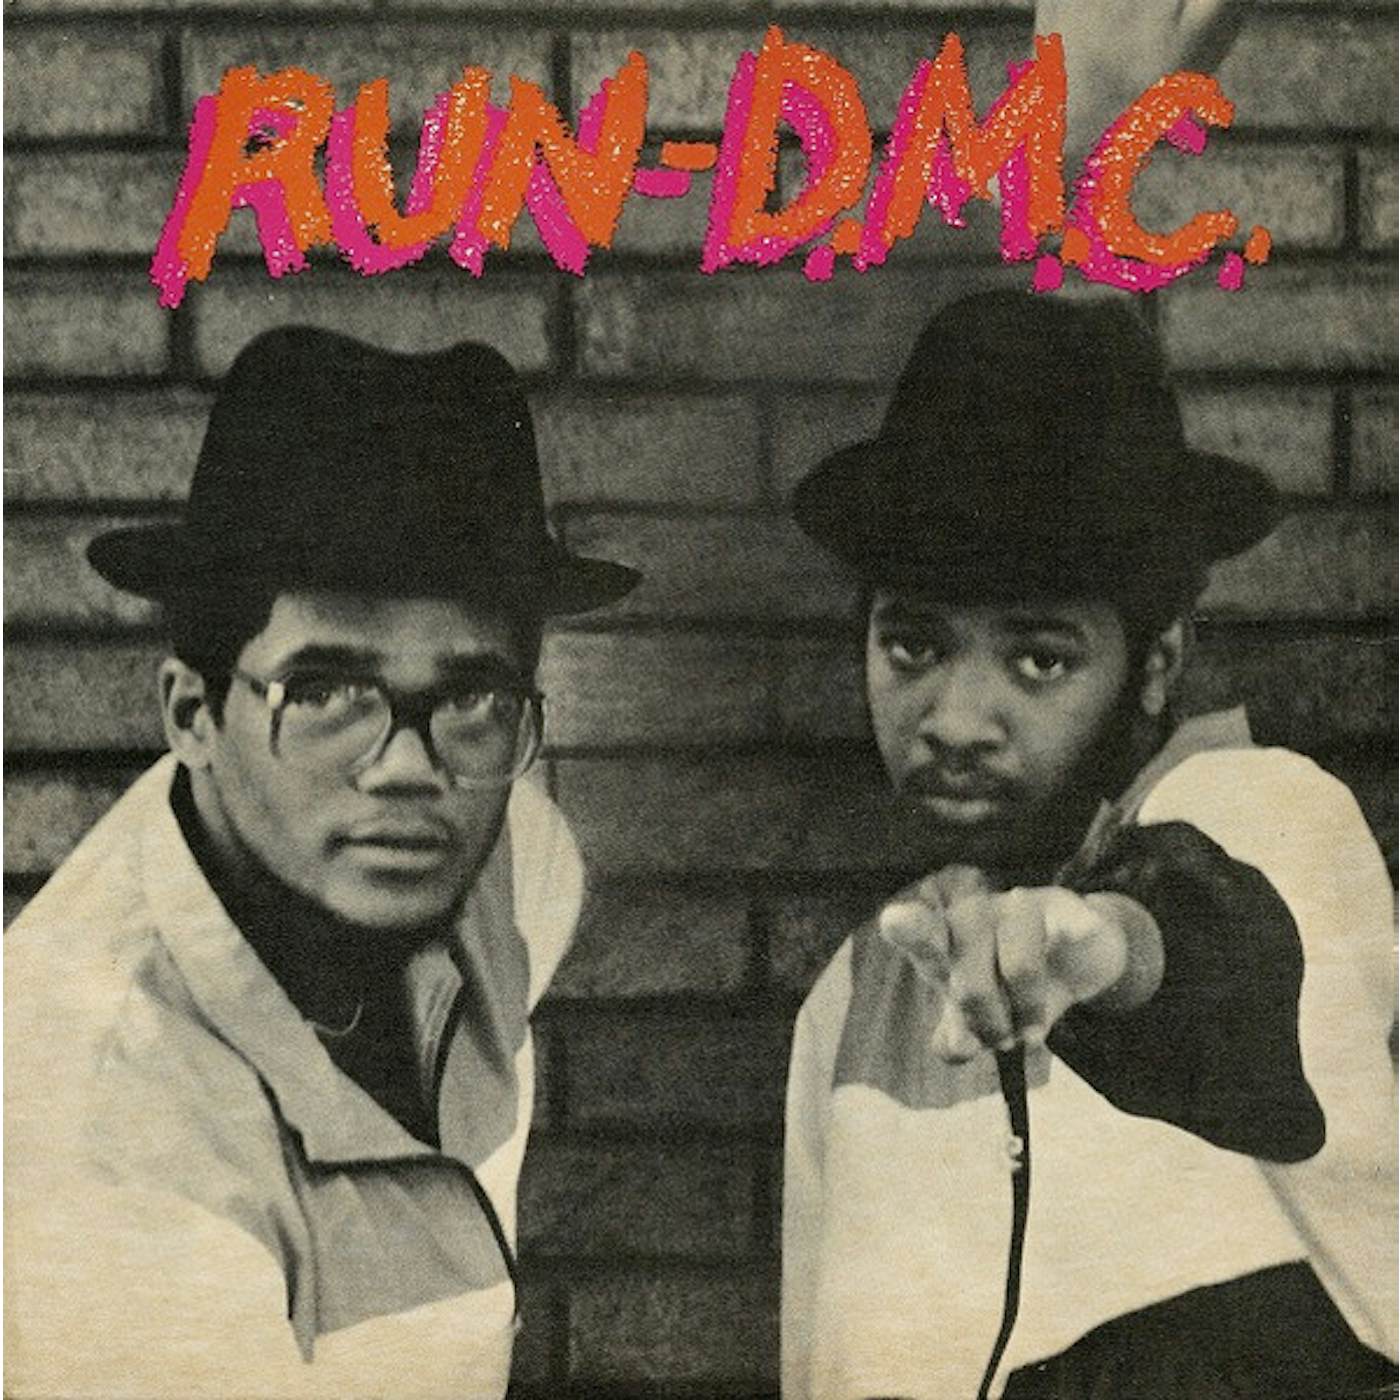  Run DMC Vinyl Record